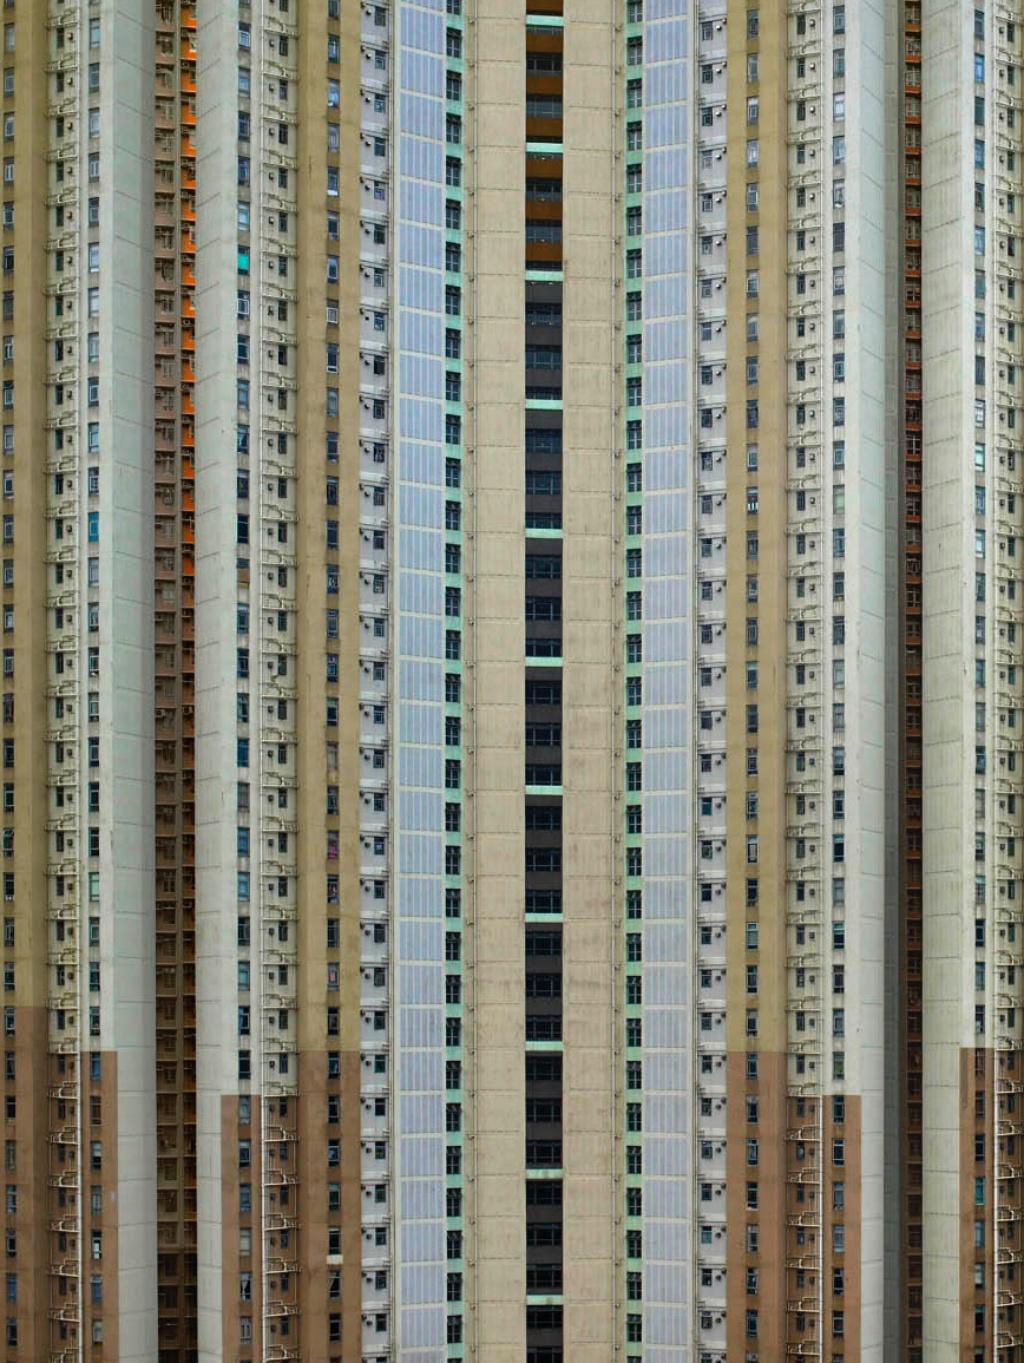 Architecture of Density #111 – Michael Wolf, City, Skyscraper, Architecture, Art For Sale 2